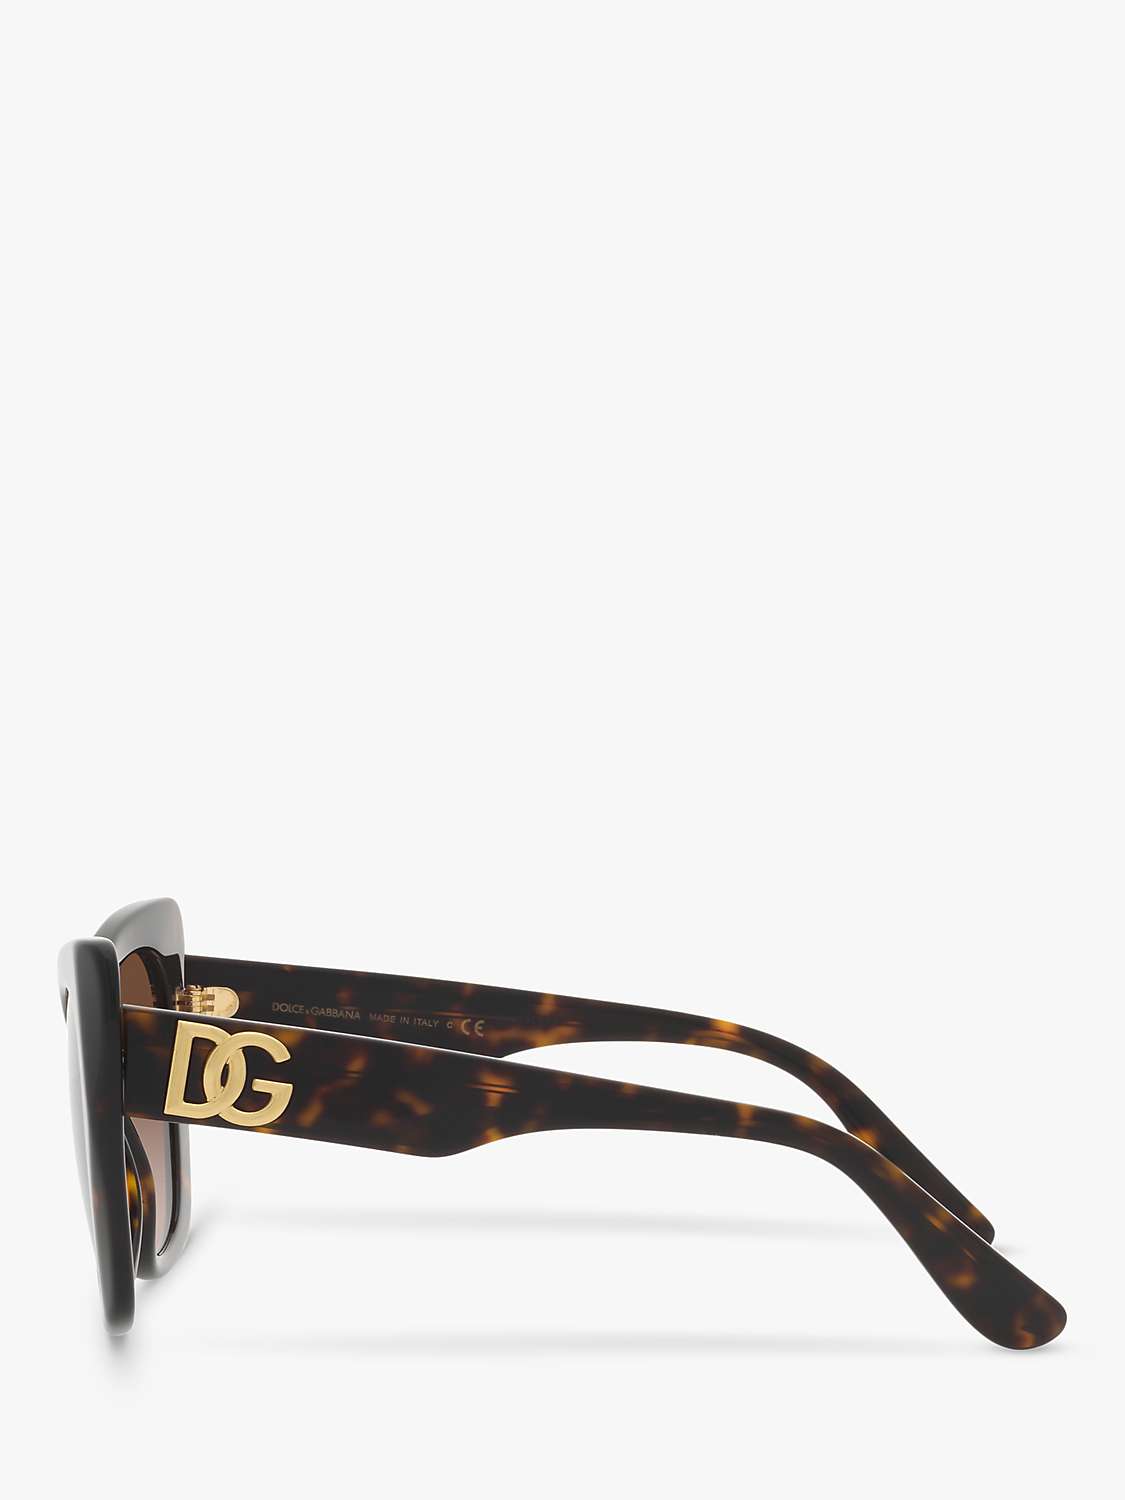 Buy Dolce & Gabbana DG4405 Women's Butterfly Sunglasses Online at johnlewis.com